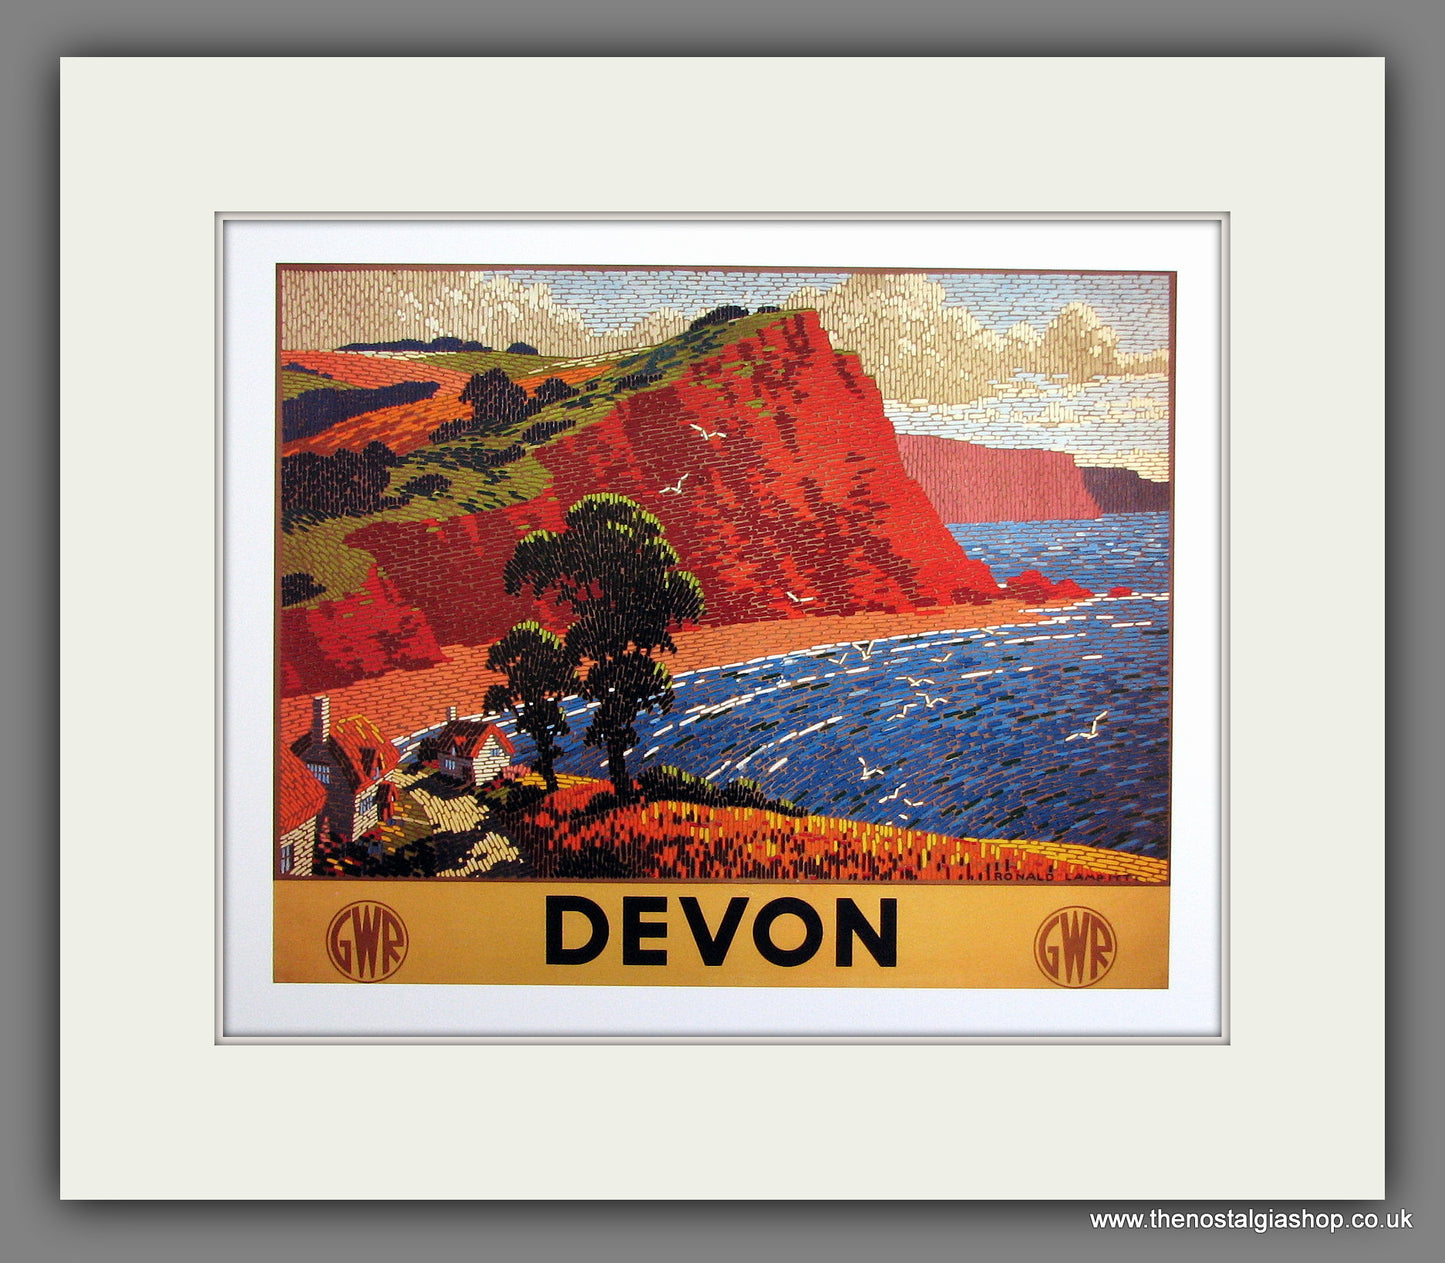 Devon. GWR. Railway Travel Advert. (Reproduction). Mounted Print.